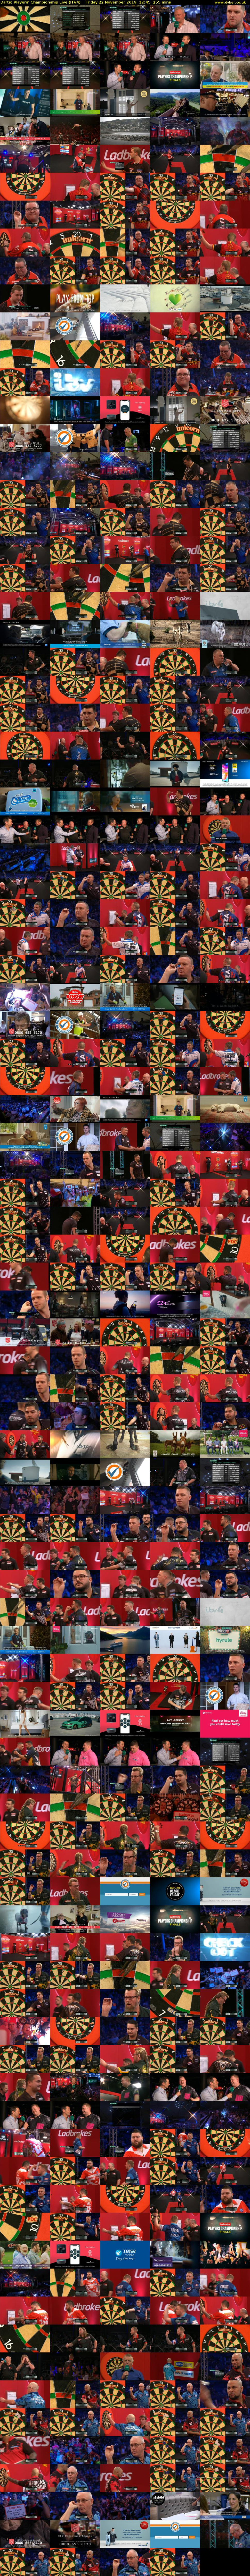 Darts: Players' Championship Live (ITV4) Friday 22 November 2019 12:45 - 17:00